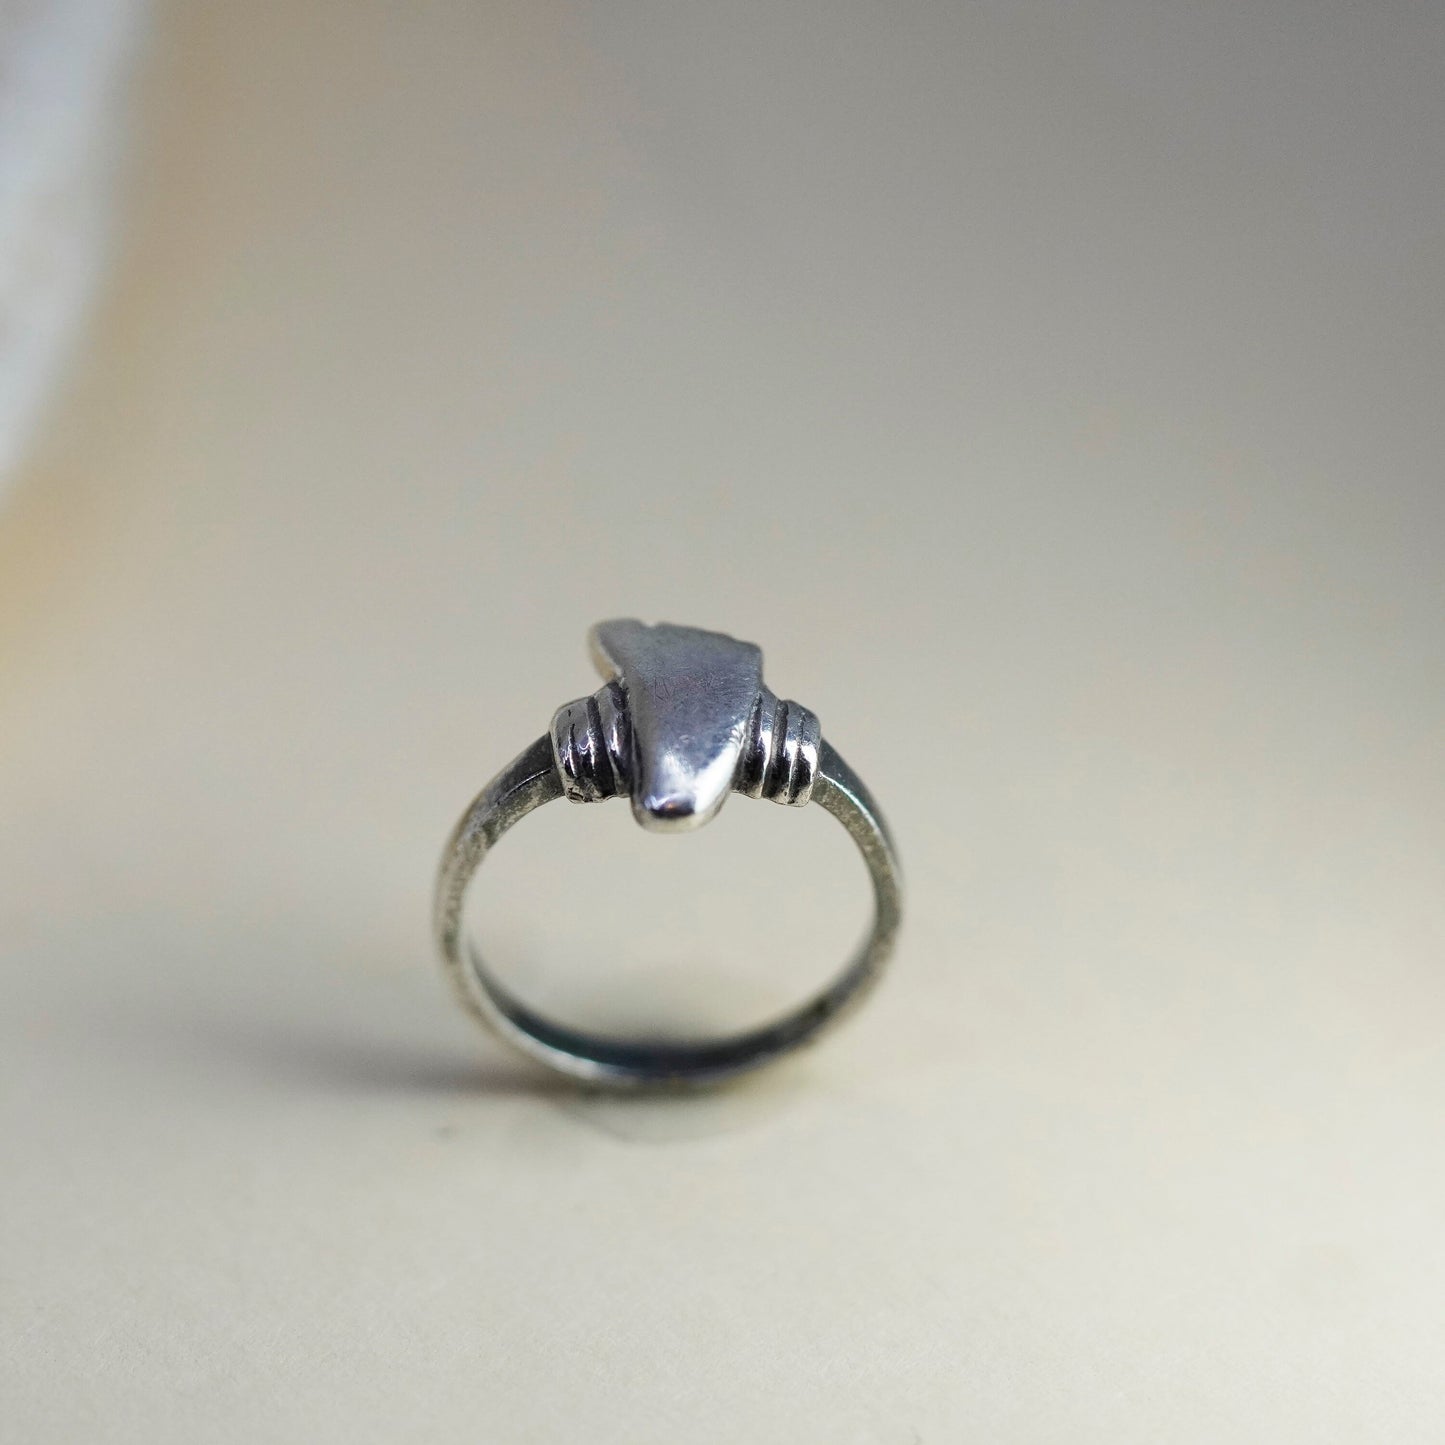 Size 1.75, Vintage sterling 925 silver handmade footprint pinky ring